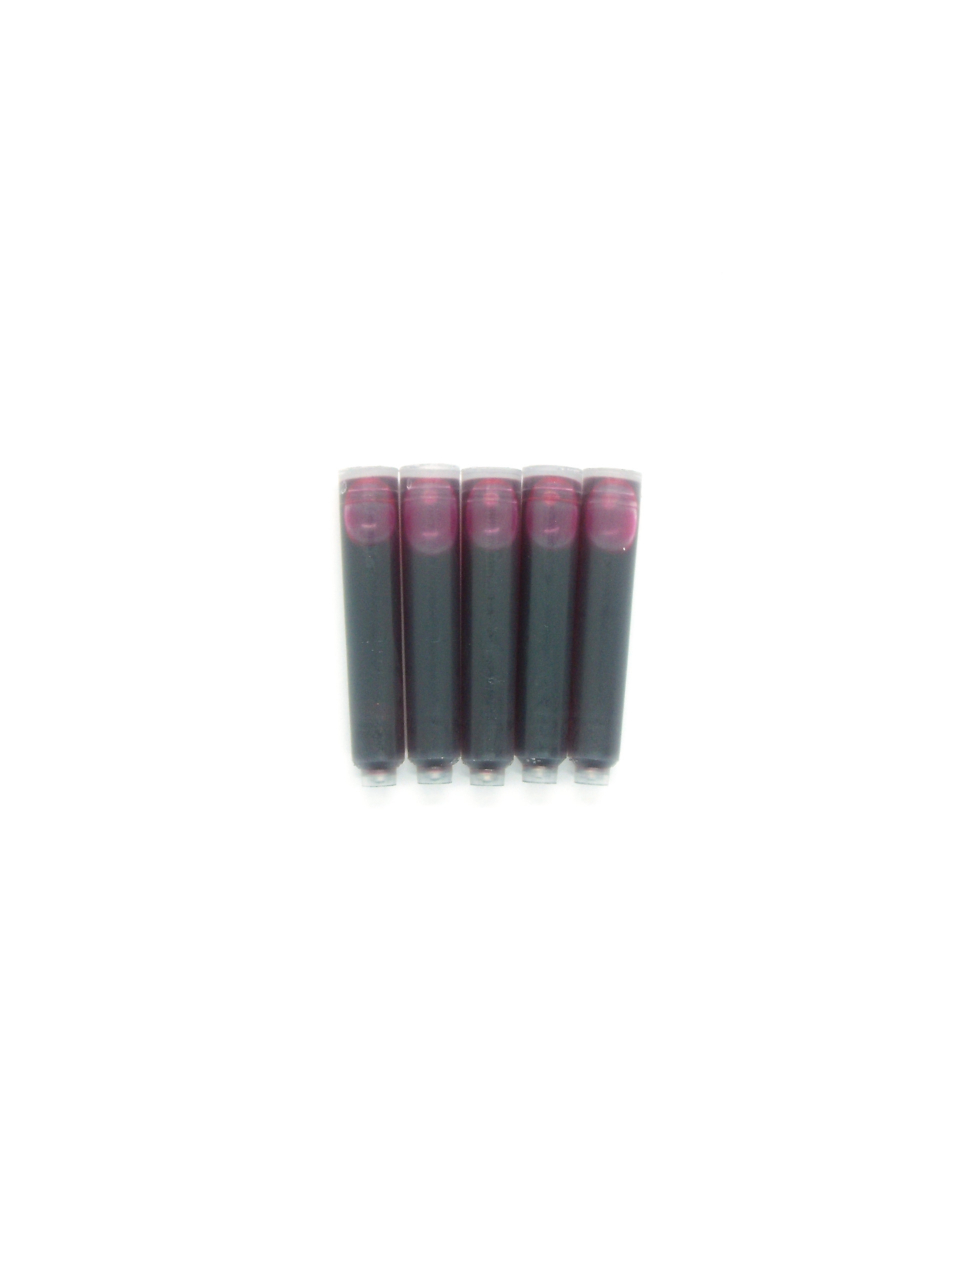 PenConverter Ink Cartridges For Filcao Fountain Pens (Pink)